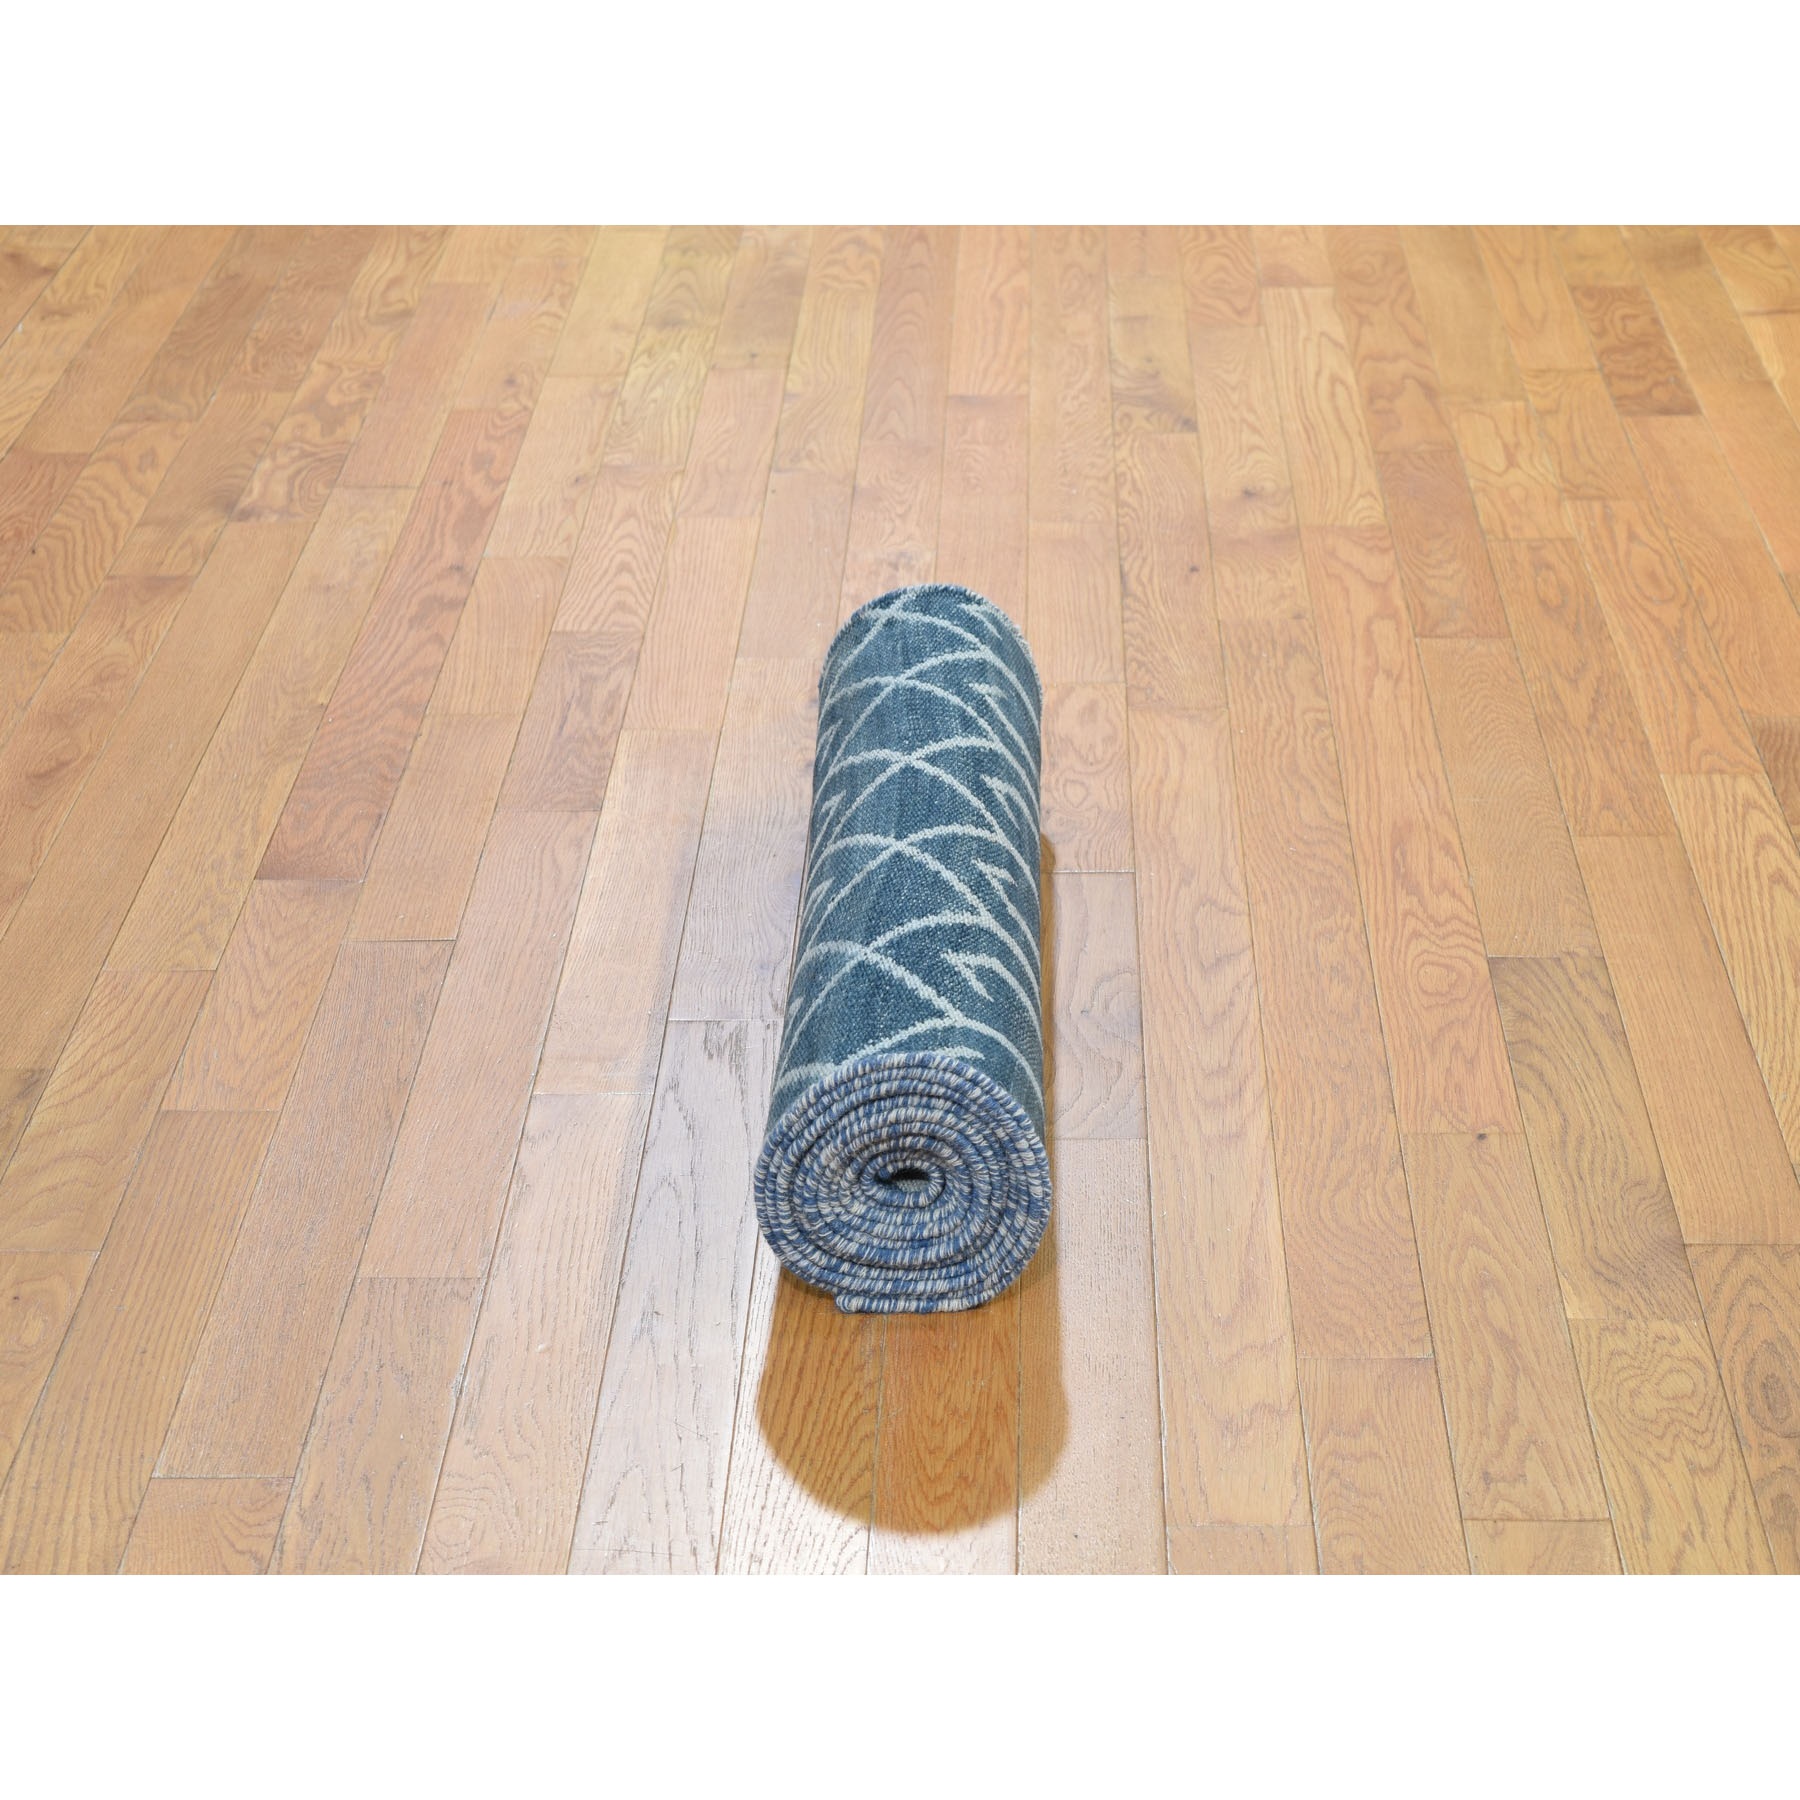 2-6 x11-10  Hand Woven Reversible Kilim Flat Weave Runner Oriental Rug 